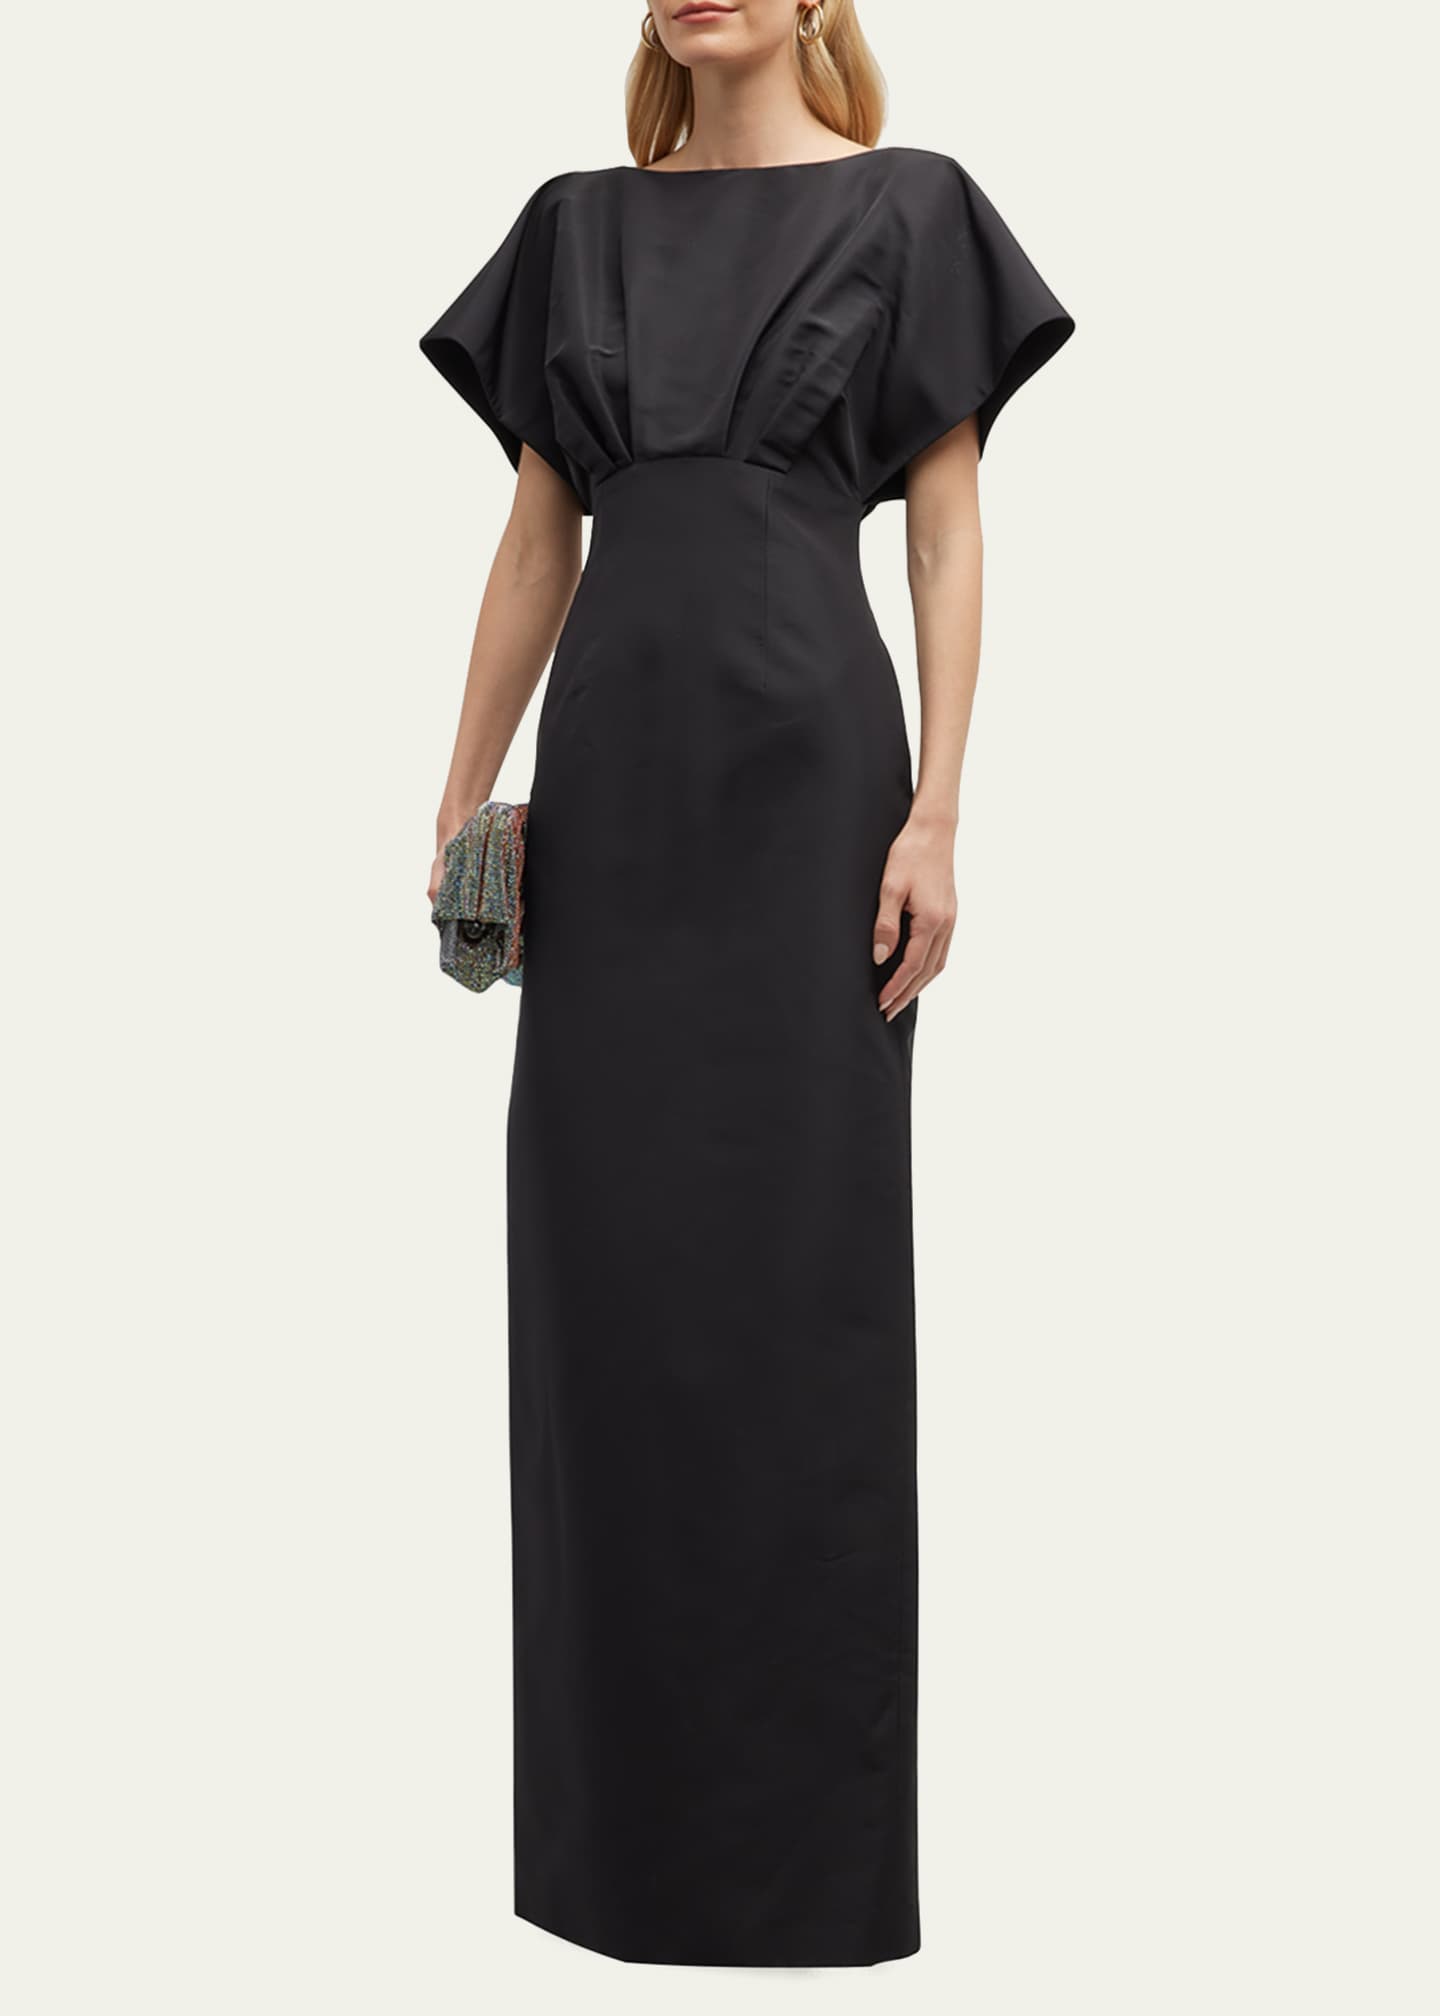 Carolina Herrera Silk Column Gown with Fan Bodice - Bergdorf Goodman